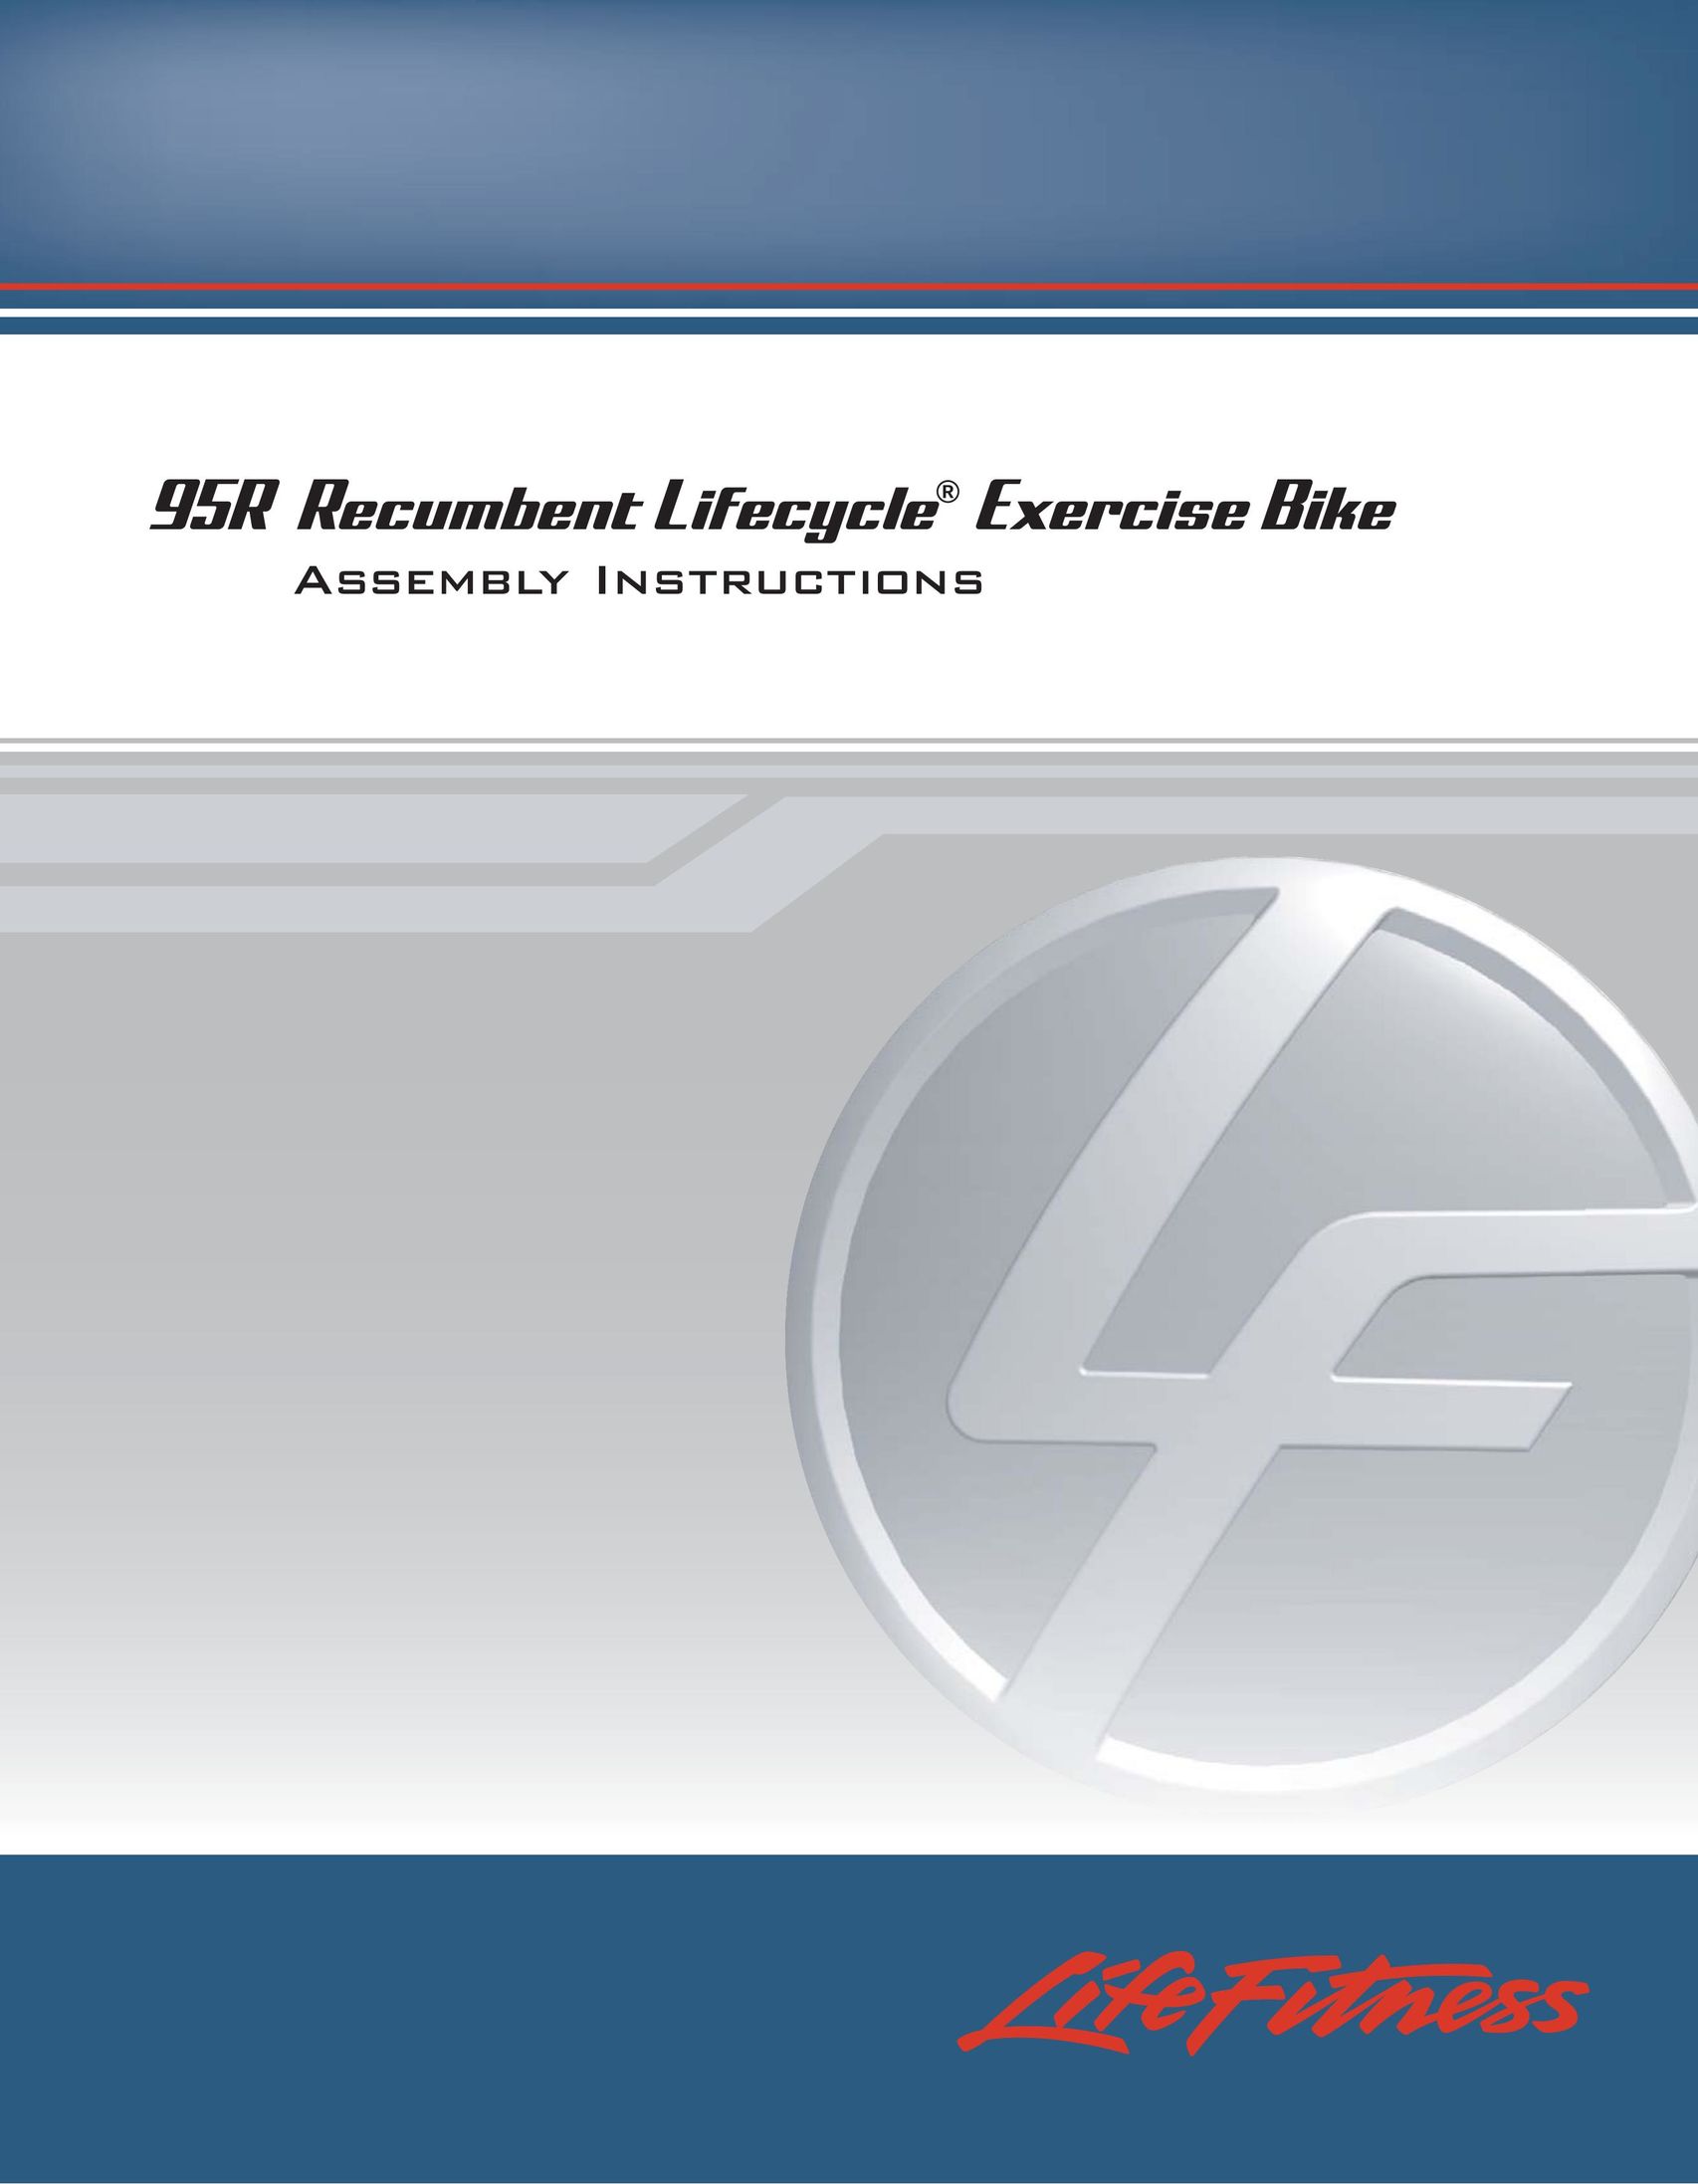 Life Fitness 95r Exercise Bike User Manual